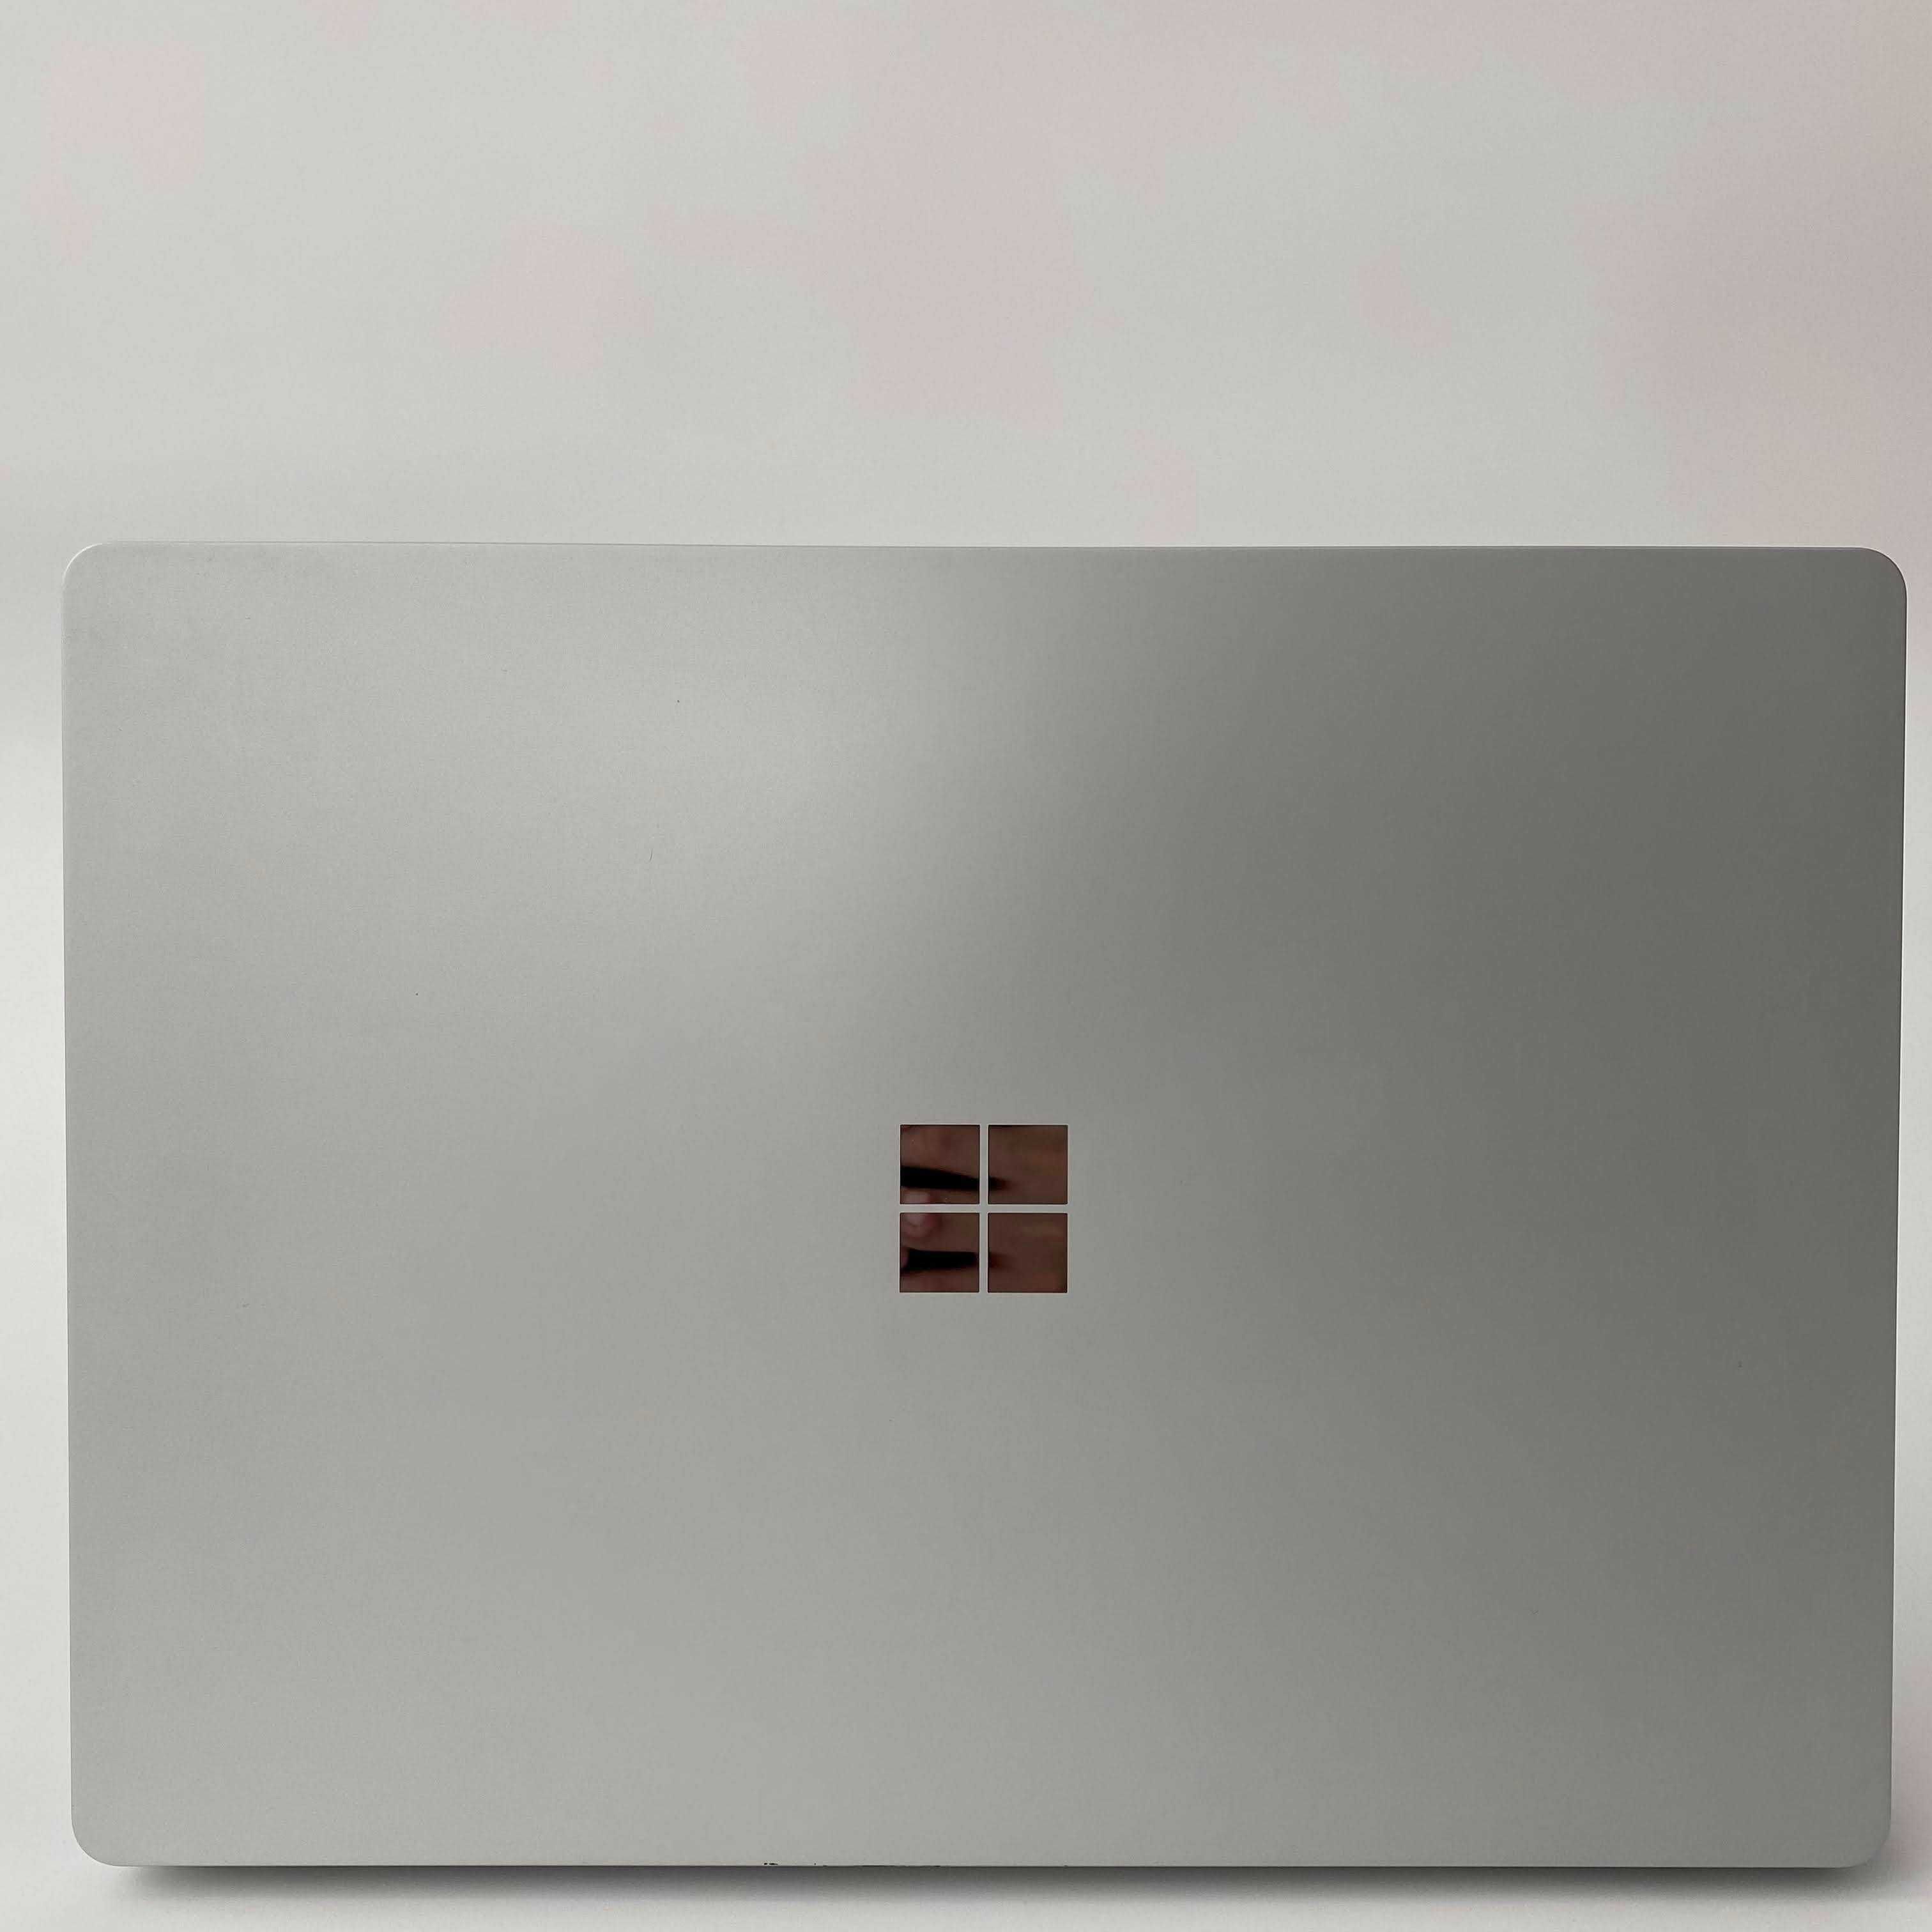 Ноутбук Microsoft Surface Laptop QHD i7-7600U/16GB RAM/512GB SSD